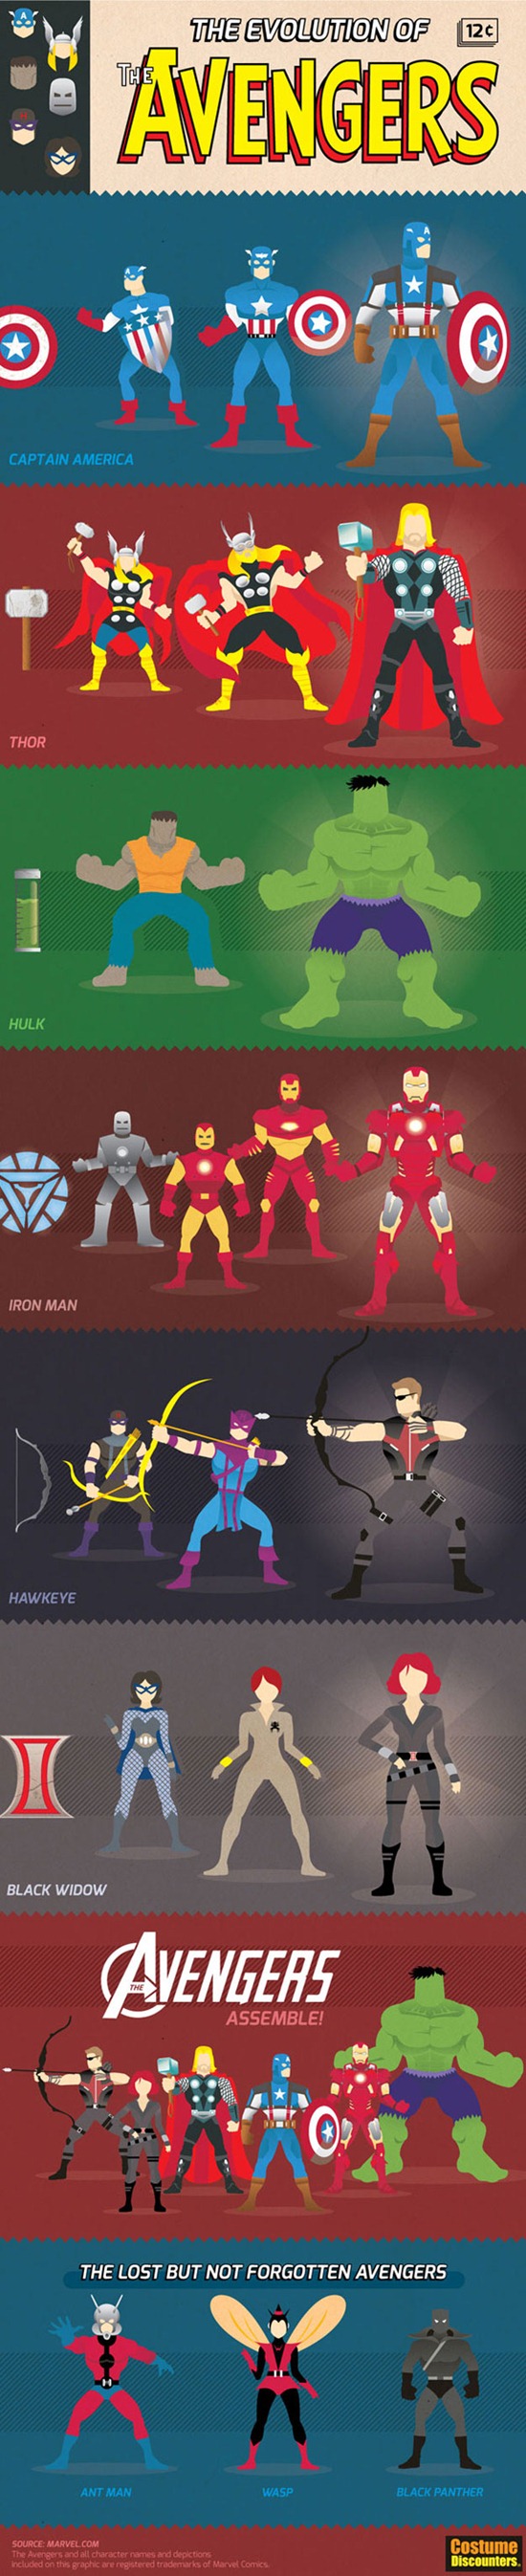 la-evolucion-de-the-avengers-infografia